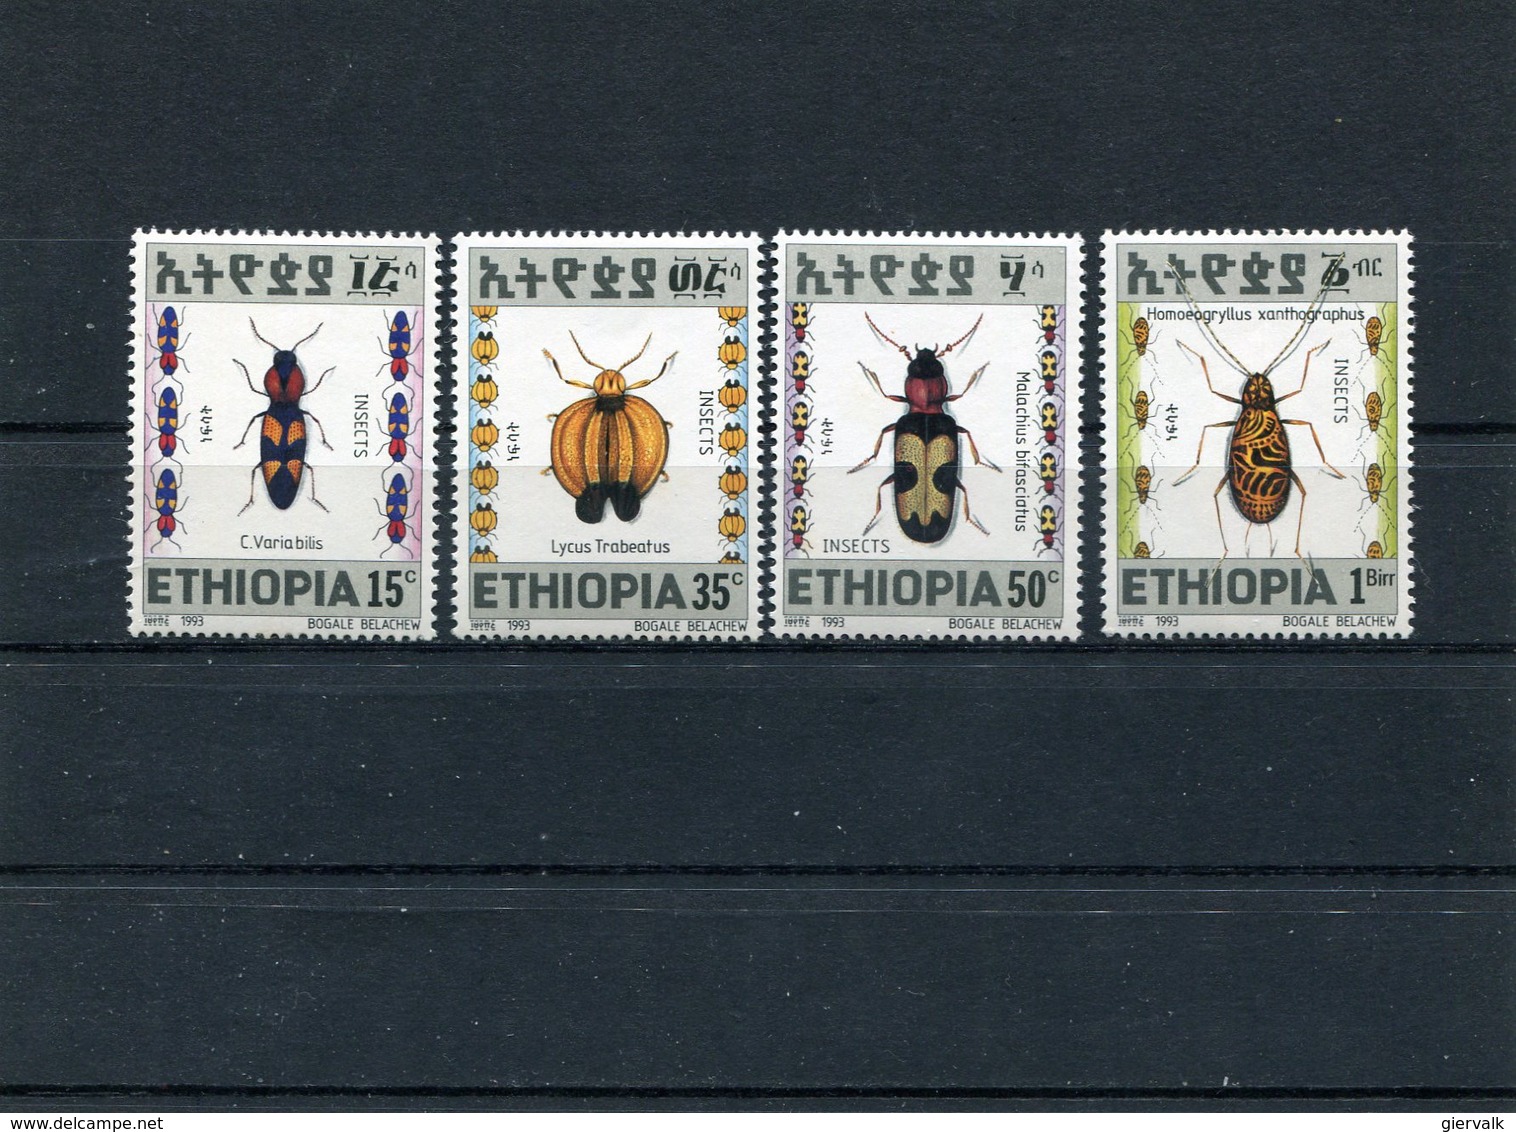 ETHIOPIA.1993 Insects.MNH. - Ethiopie